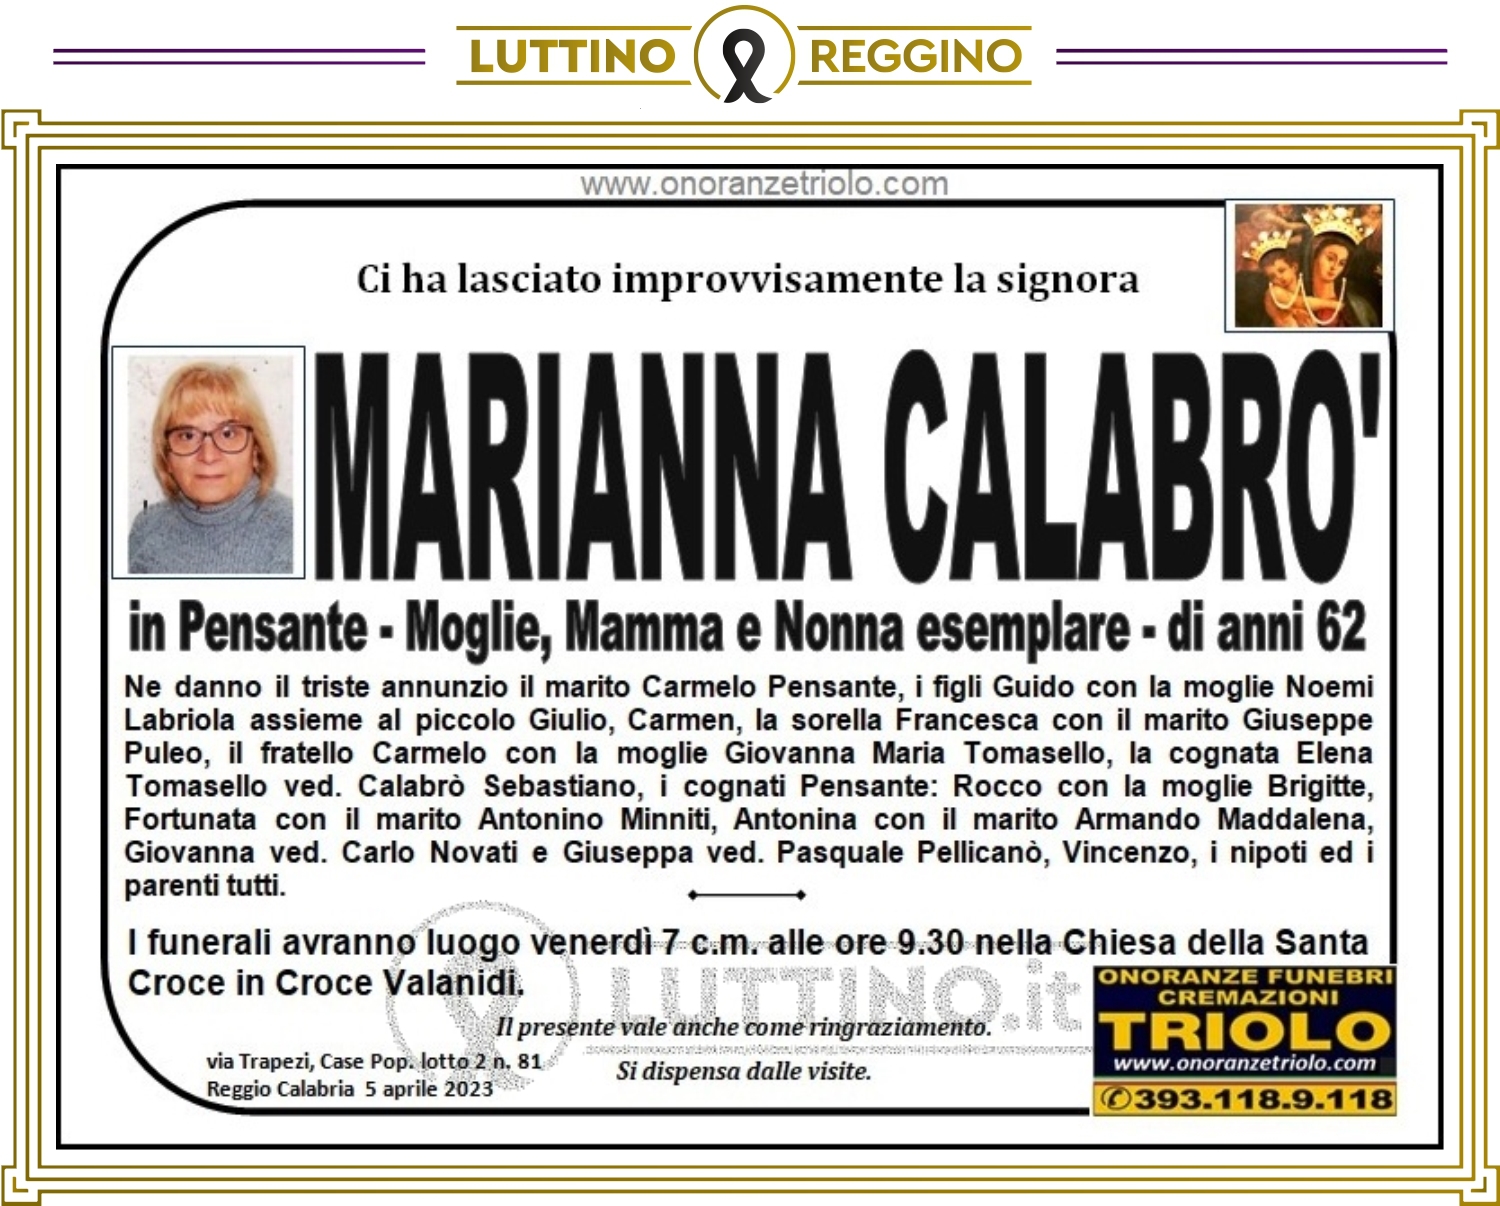 Marianna Calabrò